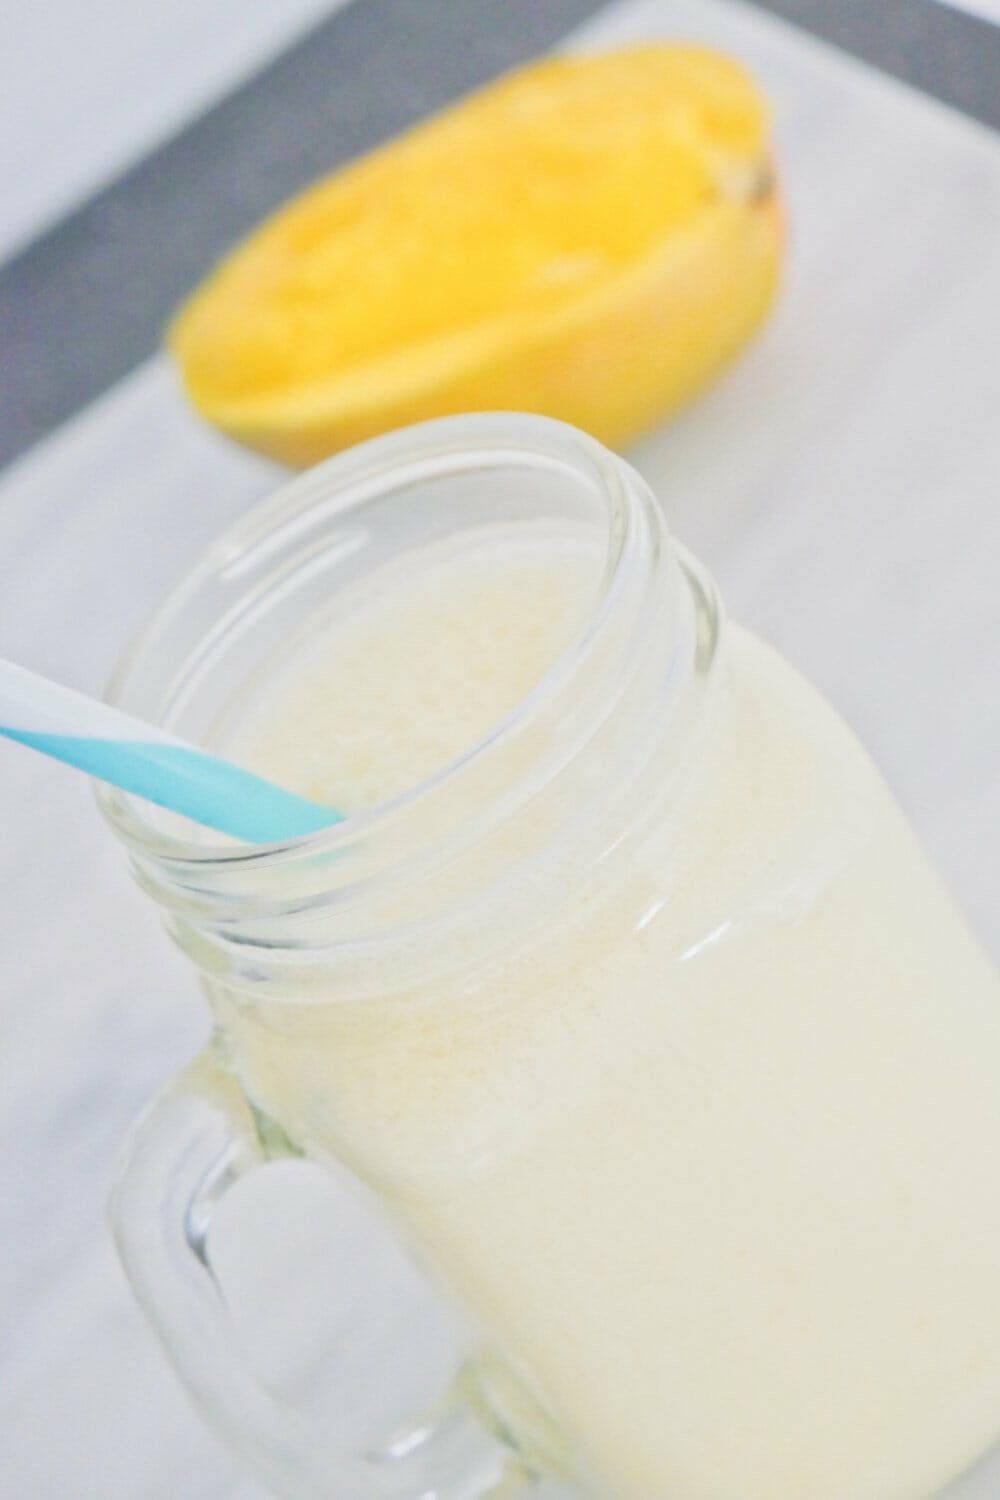 Coconut mango smoothie recipe (so refreshing + tips!) via @thesmoothiesite